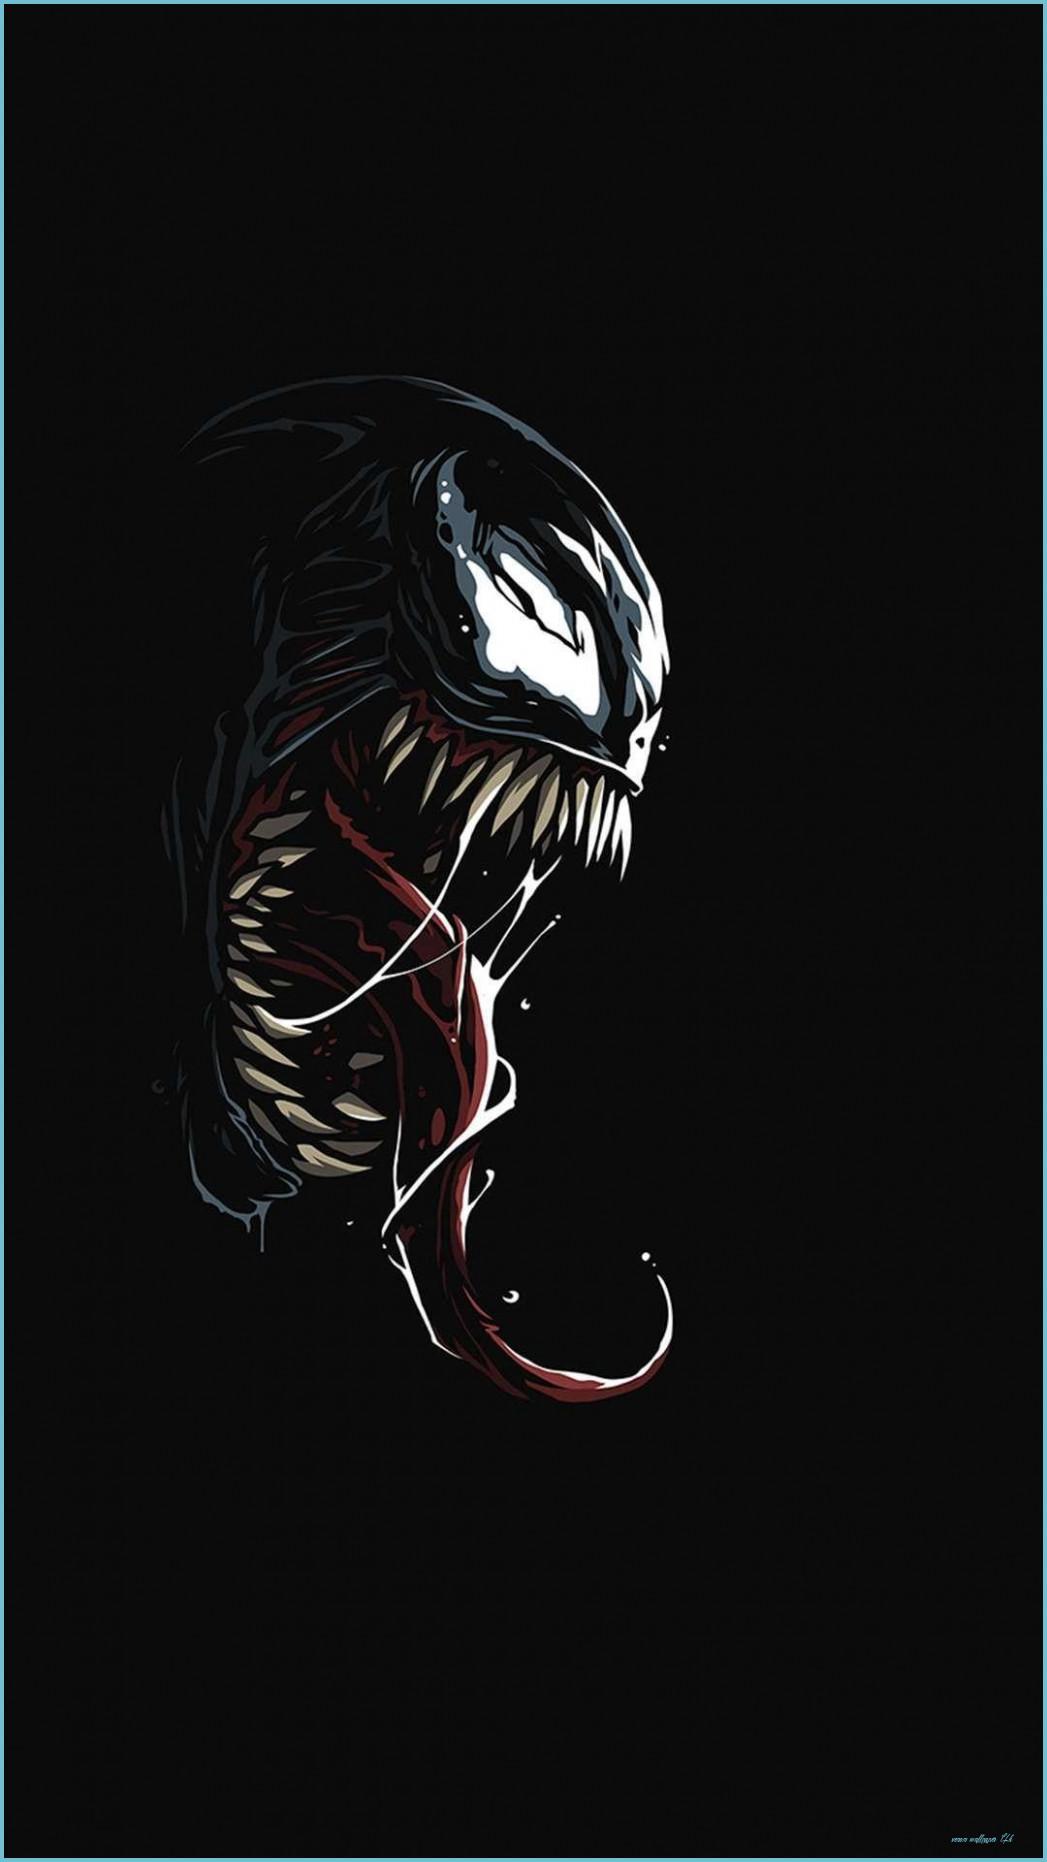 Venom Minimal Wallpapers - Top Free Venom Minimal Backgrounds ...